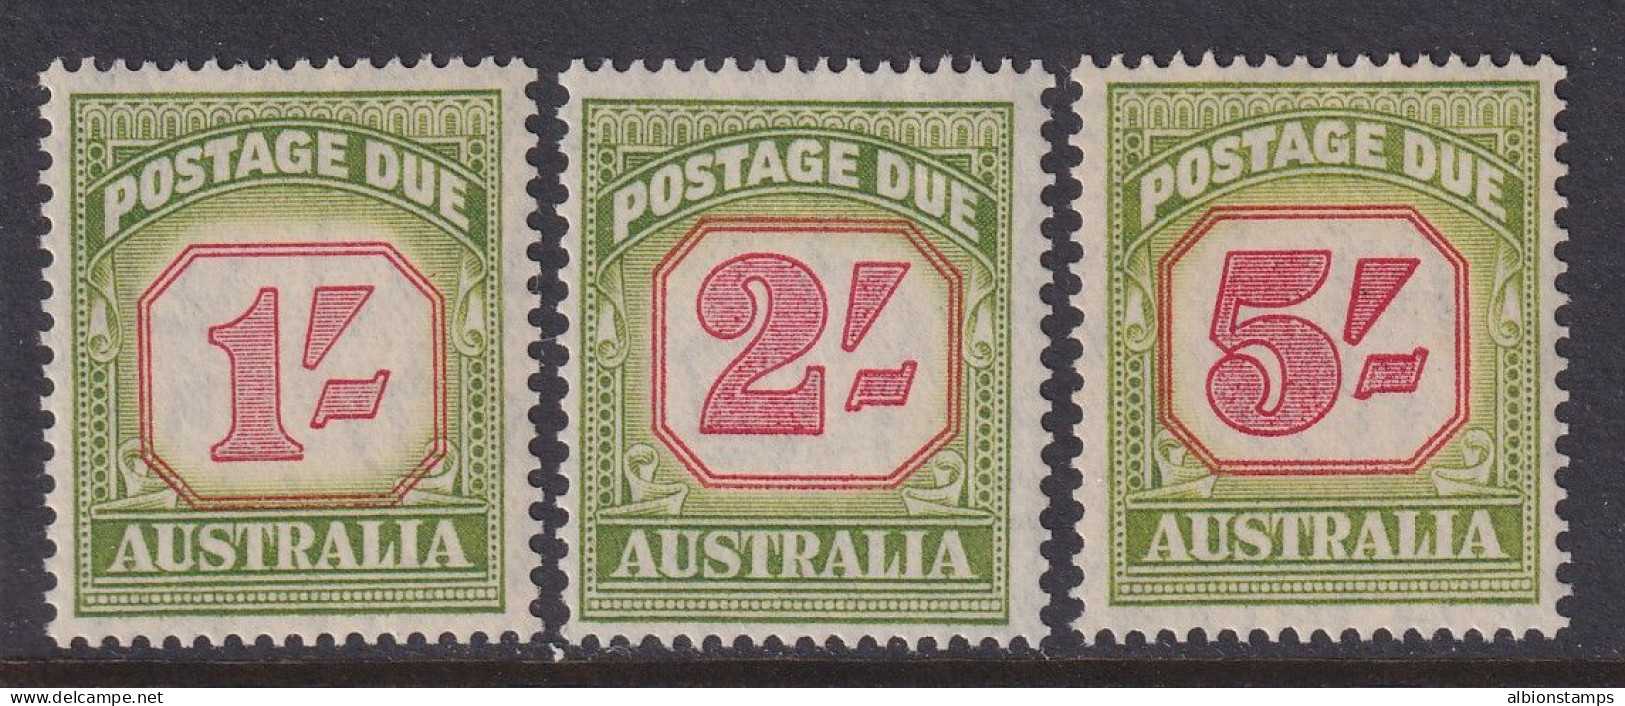 Australia, Scott J81-J83 (SG D129-D131), MNH - Postage Due